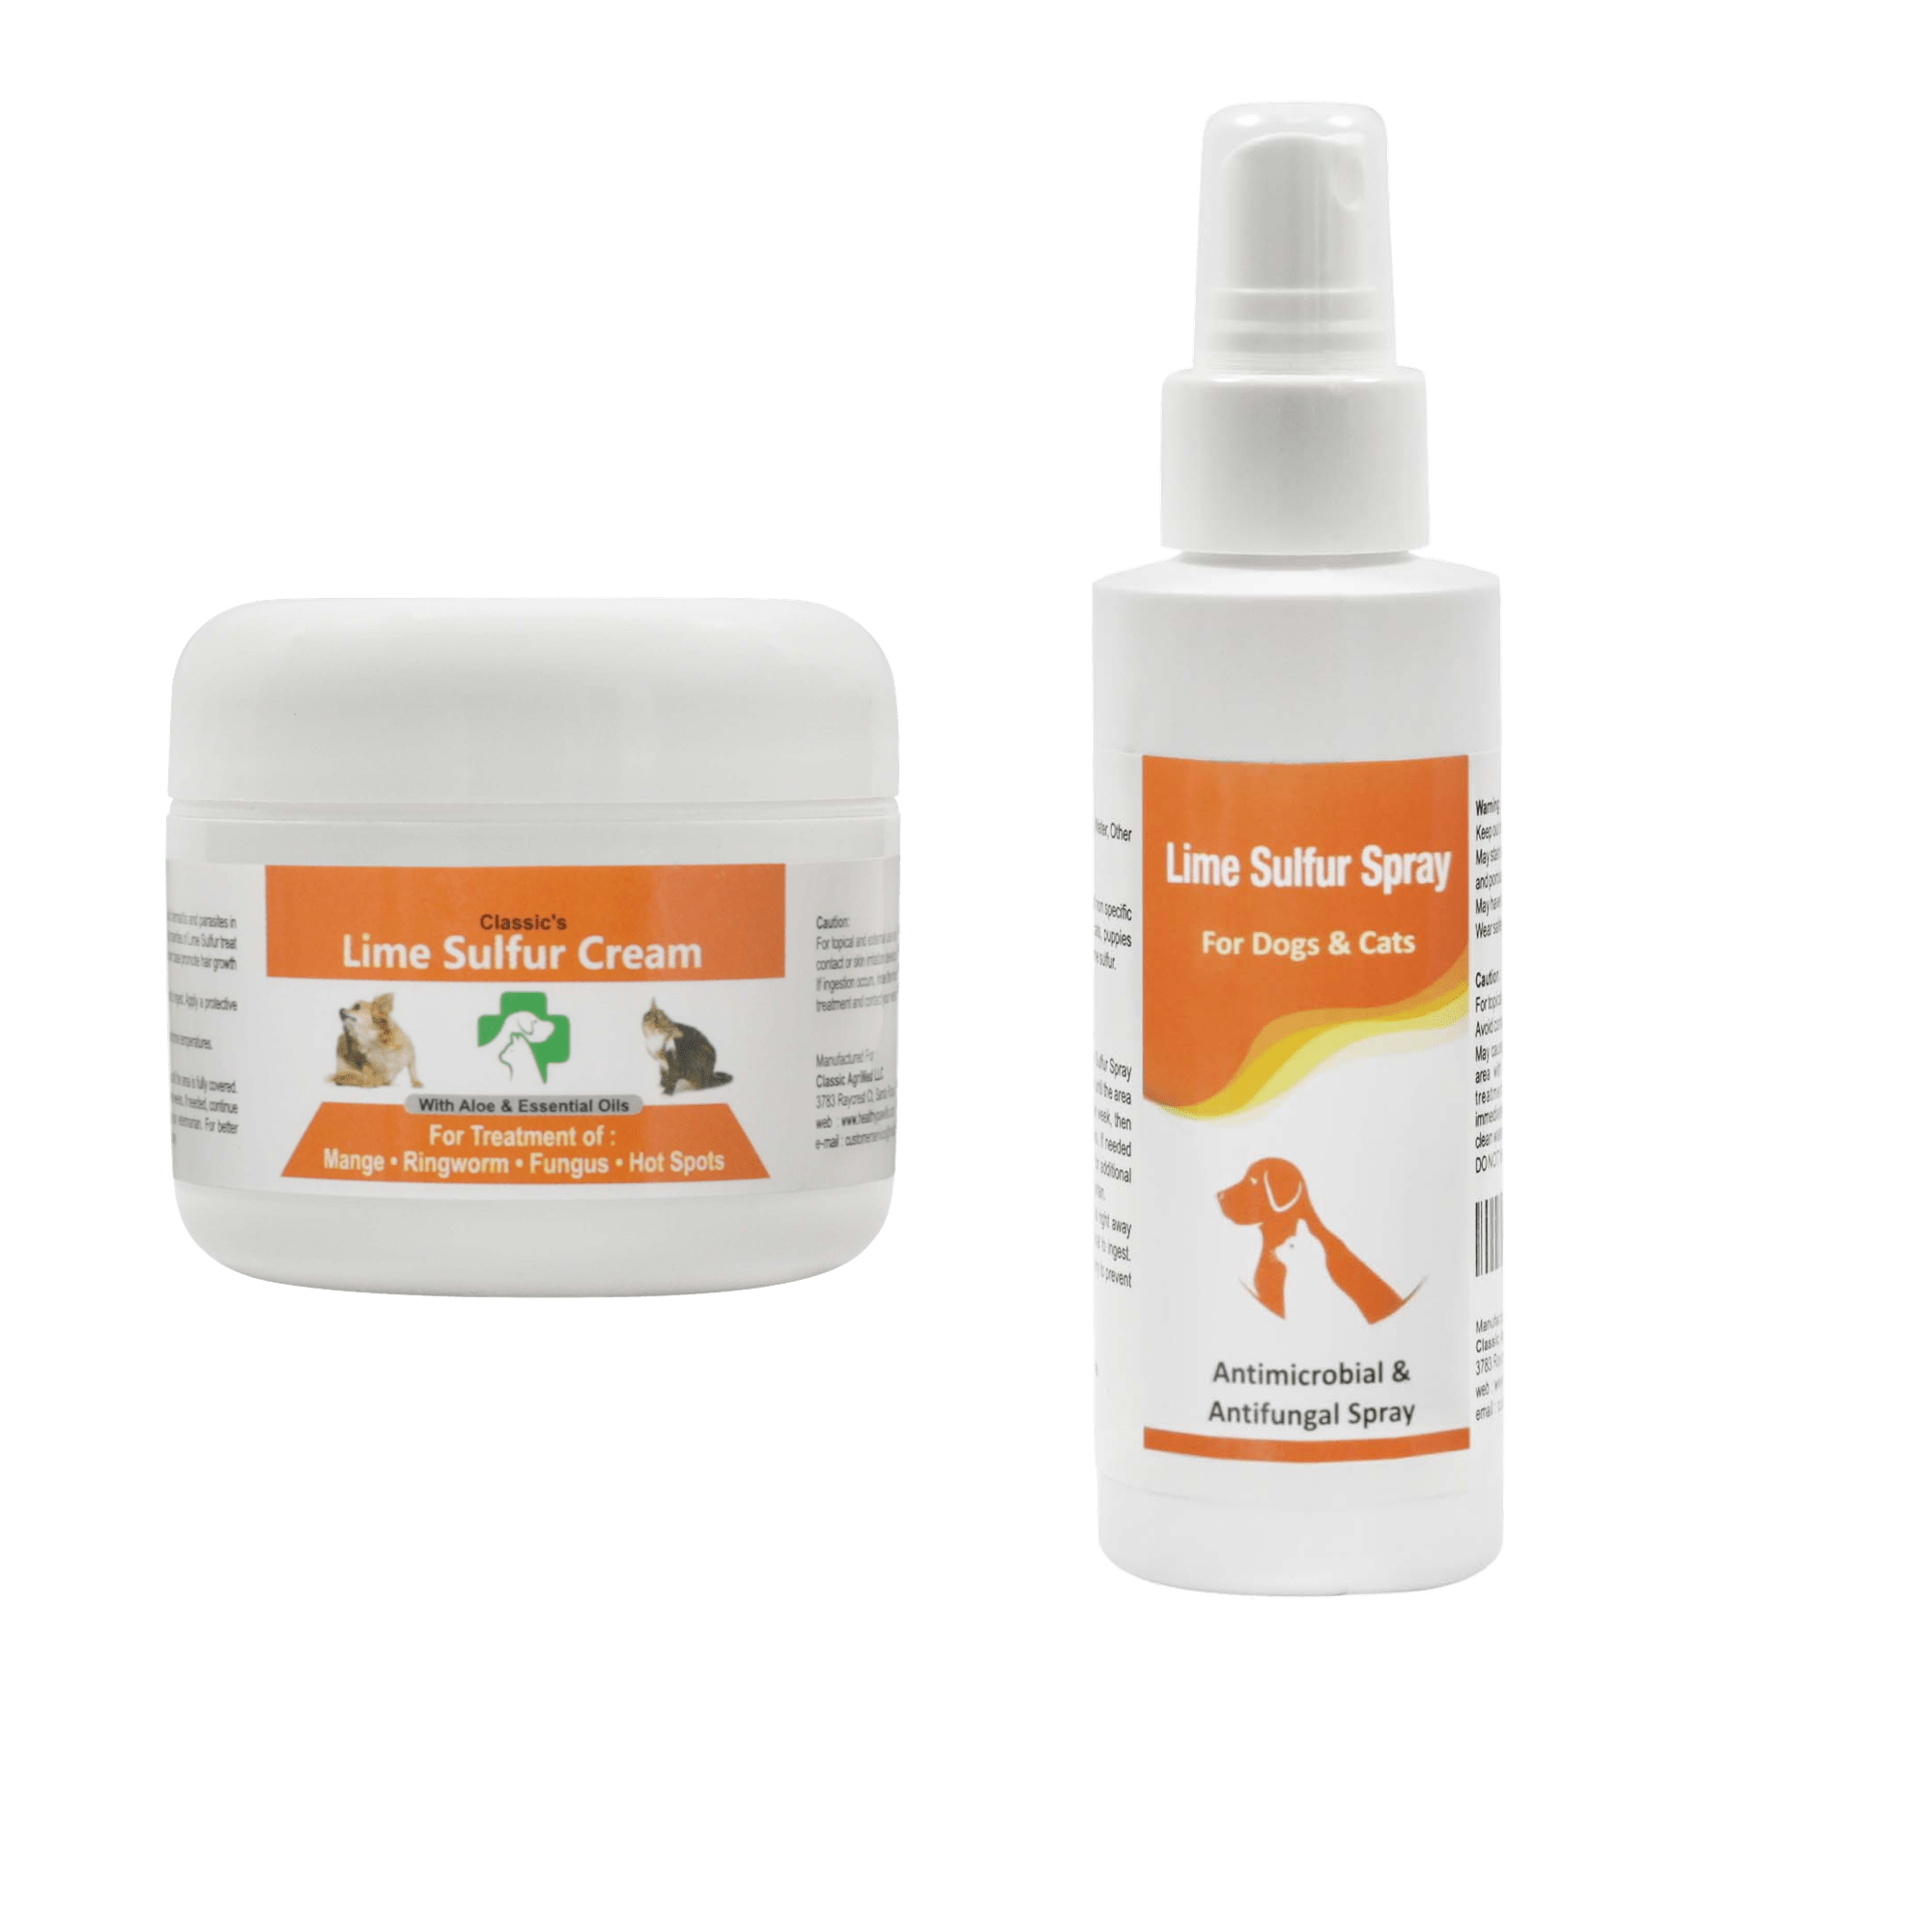 Lime Sulfur Pet Skin Cream and Spray